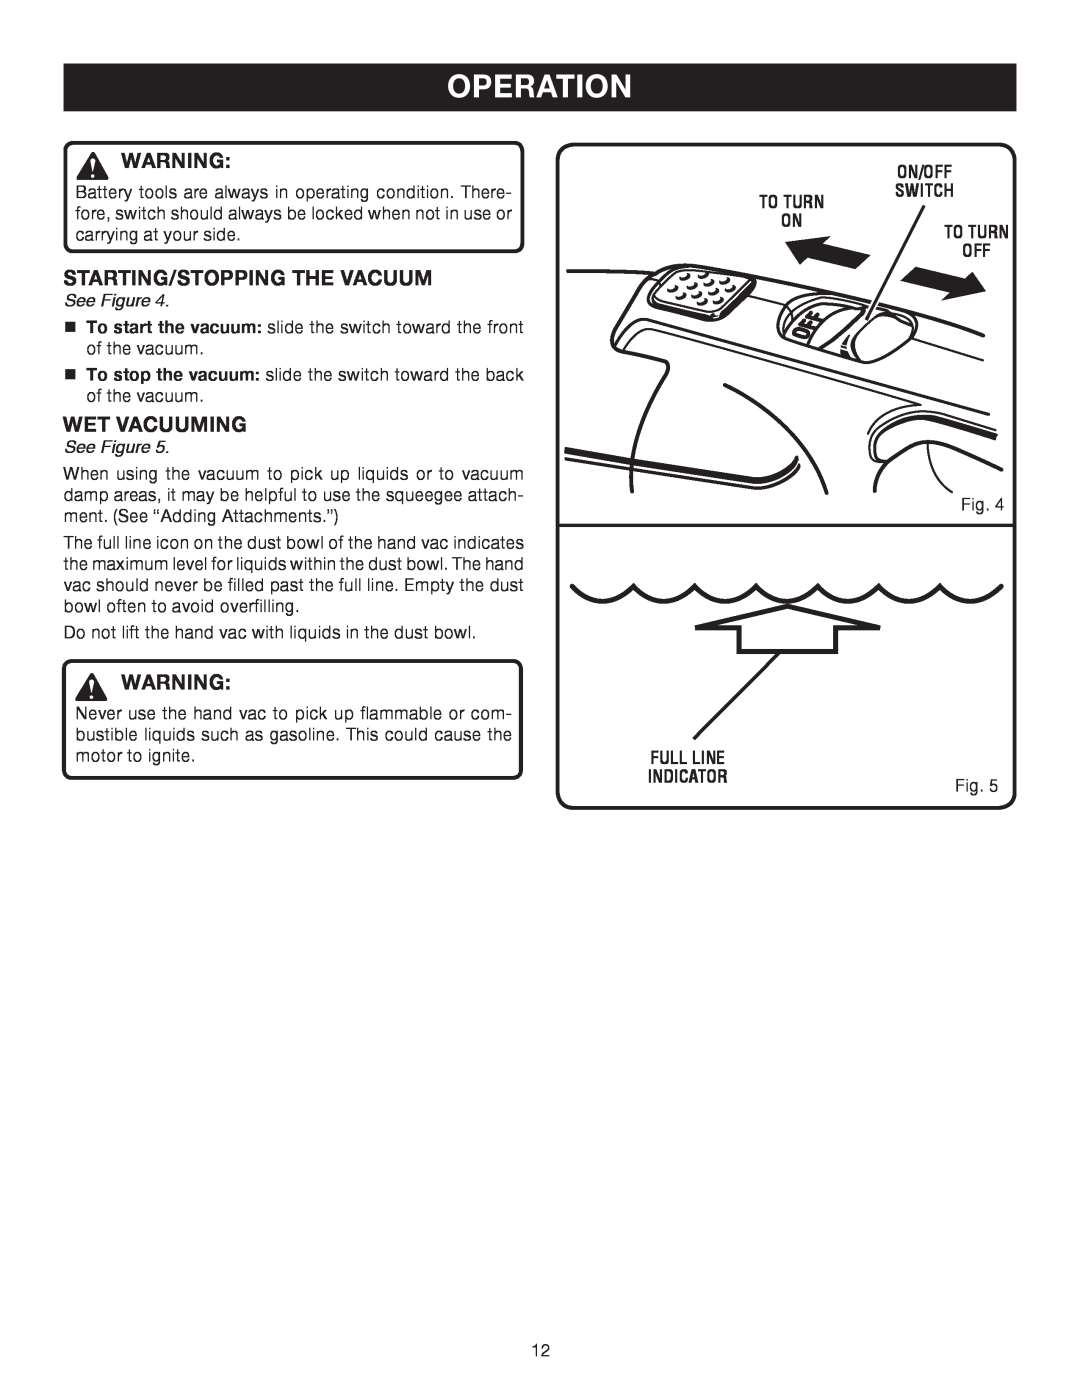 Ryobi P710 manual Starting/Stopping The Vacuum, Wet Vacuuming, Operation, See Figure 